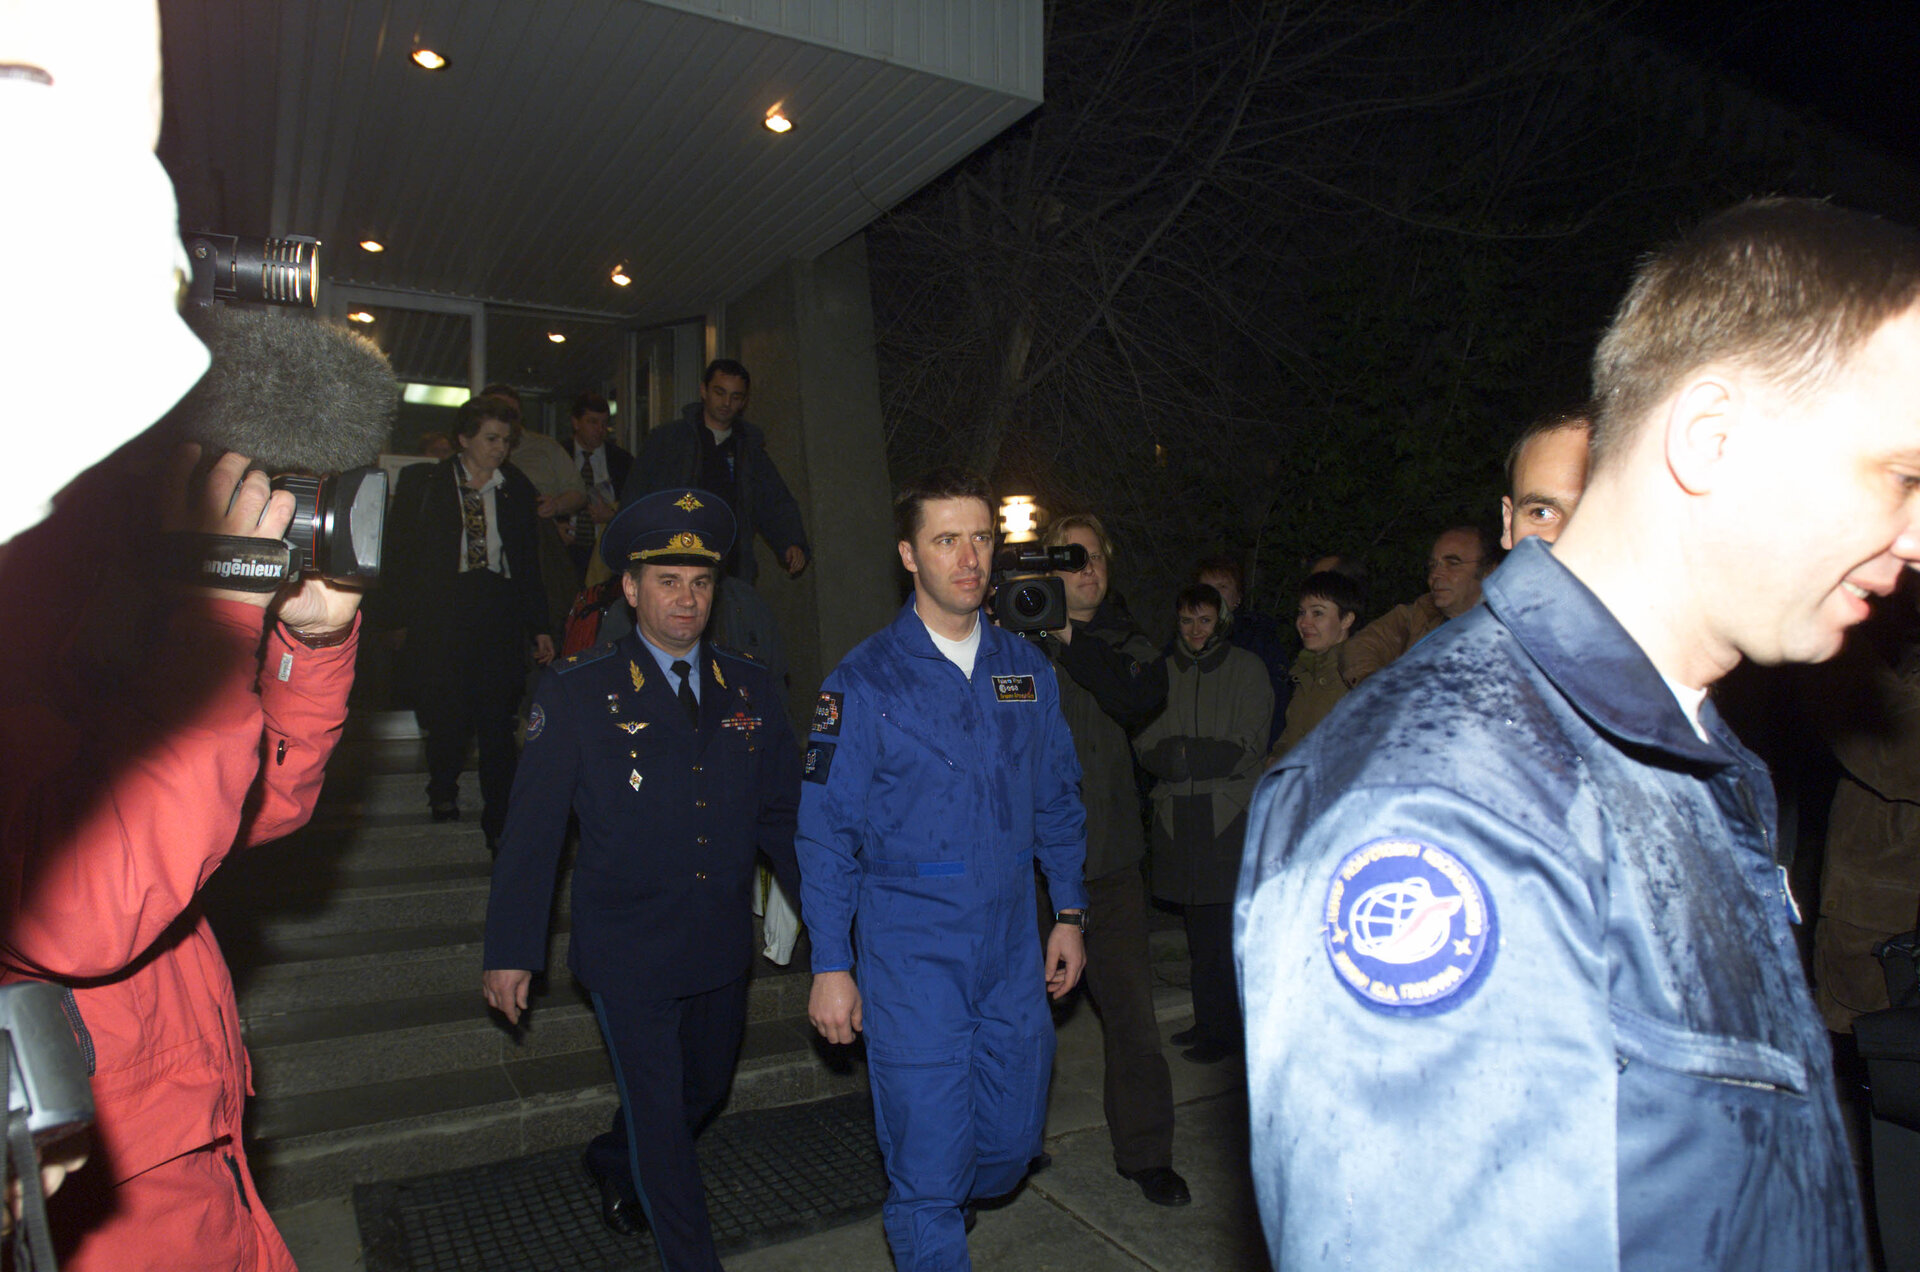 Marco Polo mission crew departure for dons spacesuit at Baikonour  (Thursday 25 April 2002)